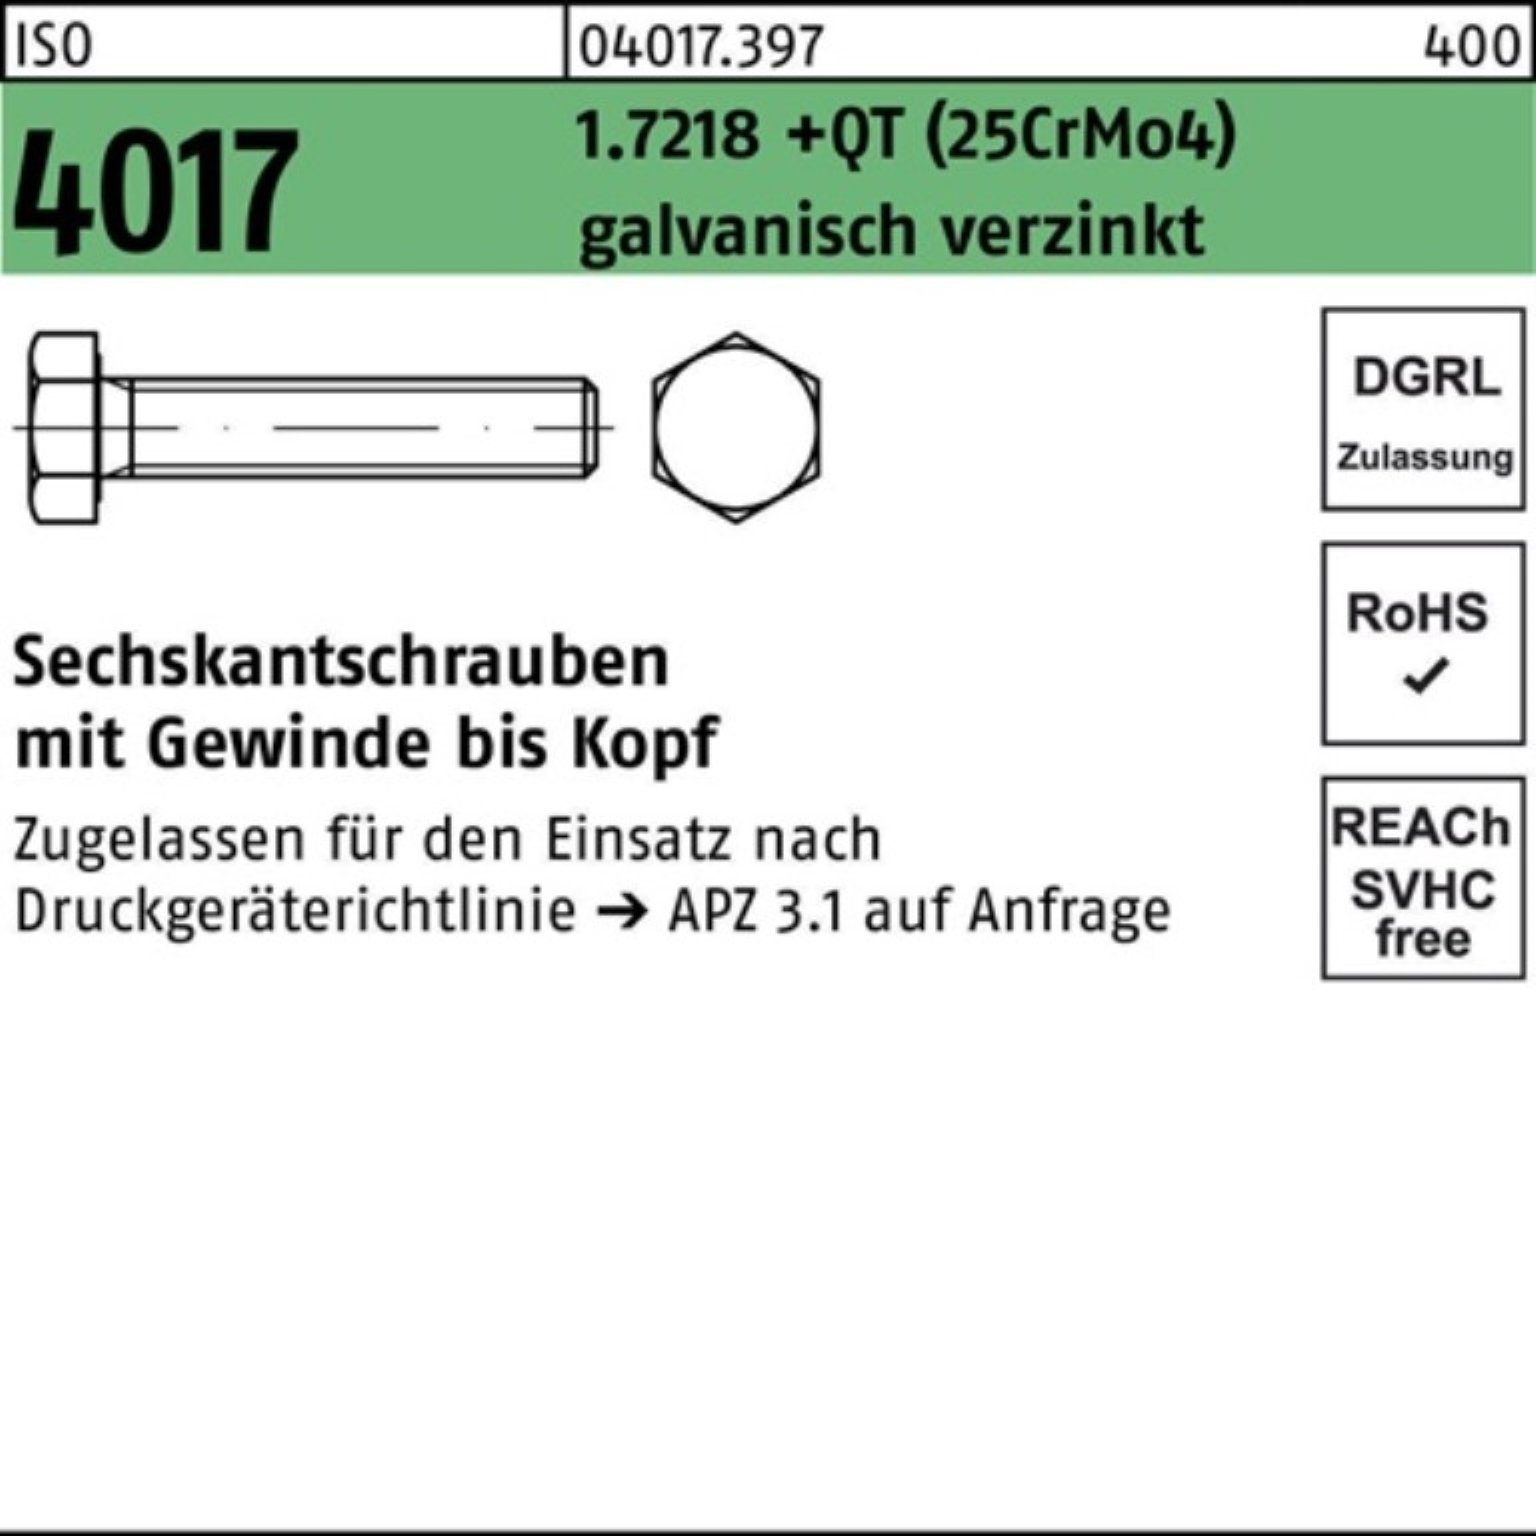 Sechskantschraube VG ISO 4017 Pack +QT (25CrMo4) Sechskantschraube 100er g Bufab 1.7218 M12x35